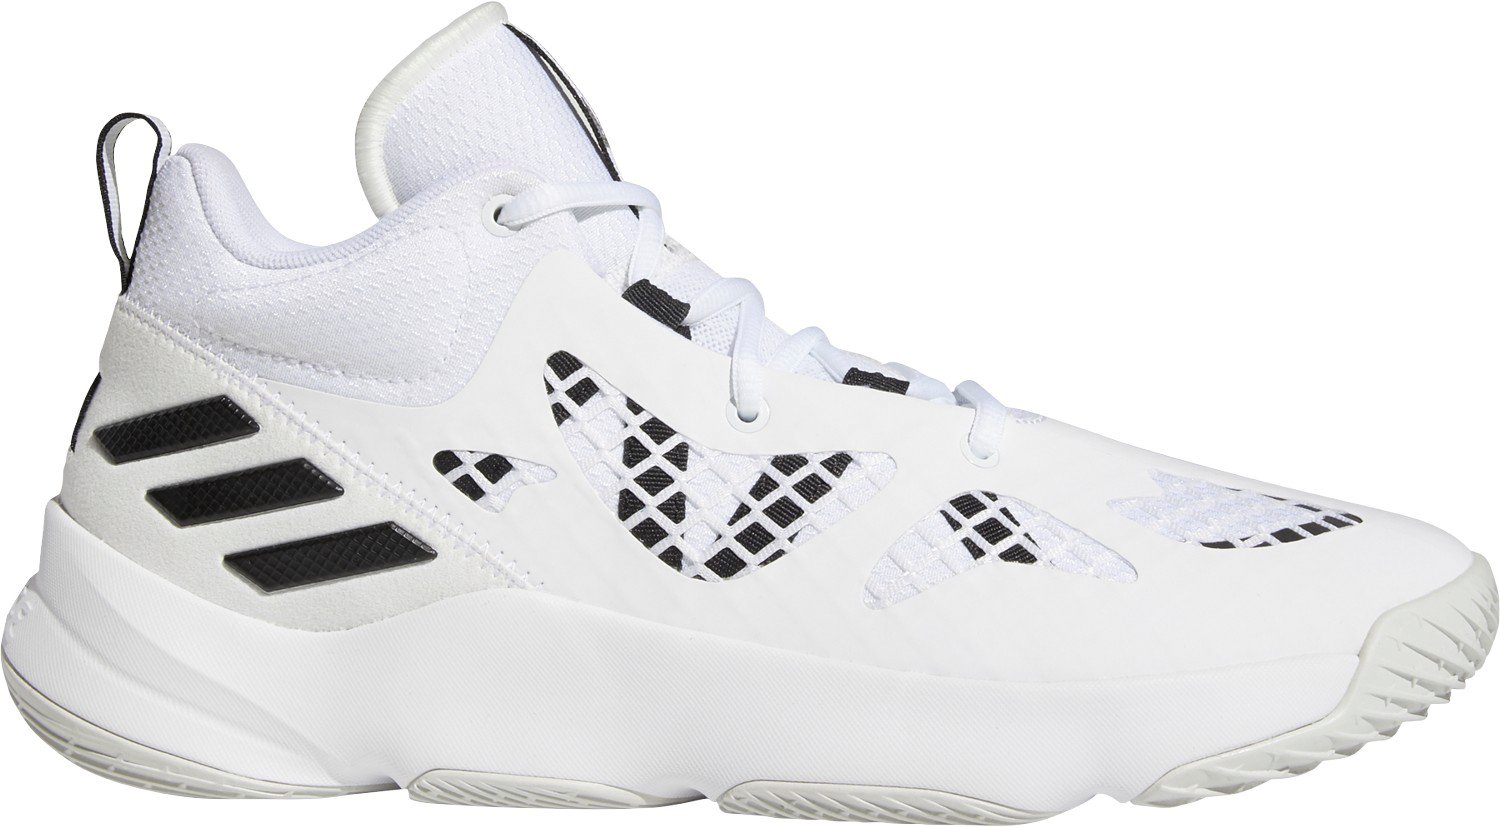 New Adidas Basketball Shoes Coming Out | lupon.gov.ph